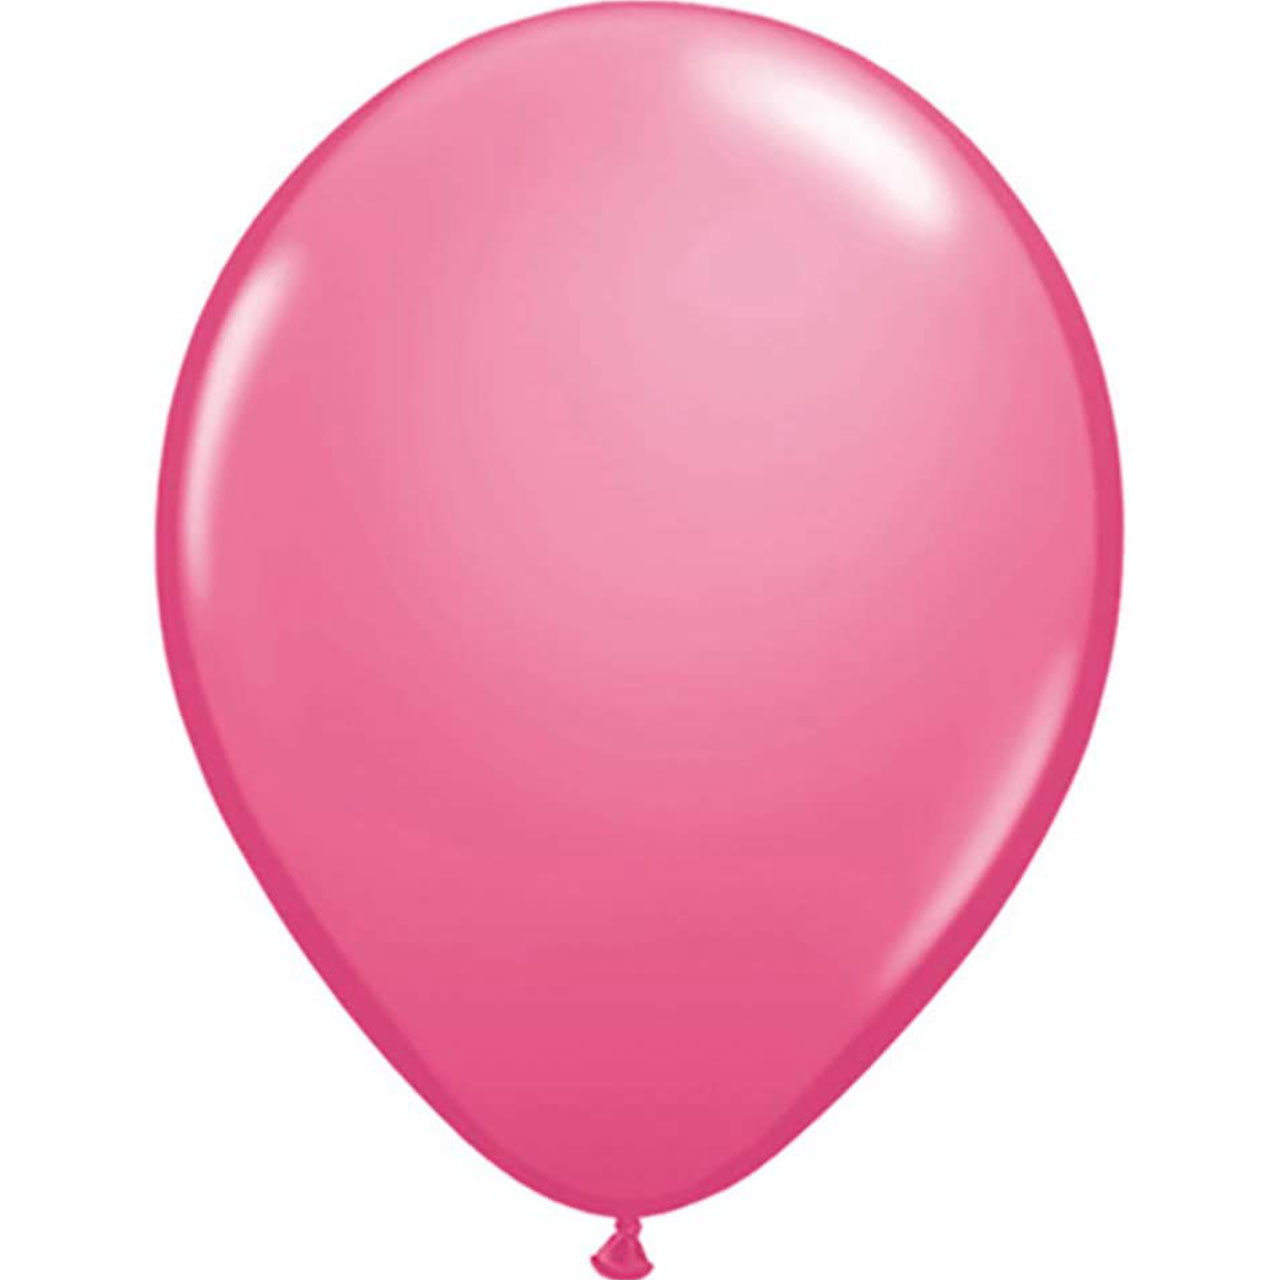 3 Ballons Rose - Large 40cm